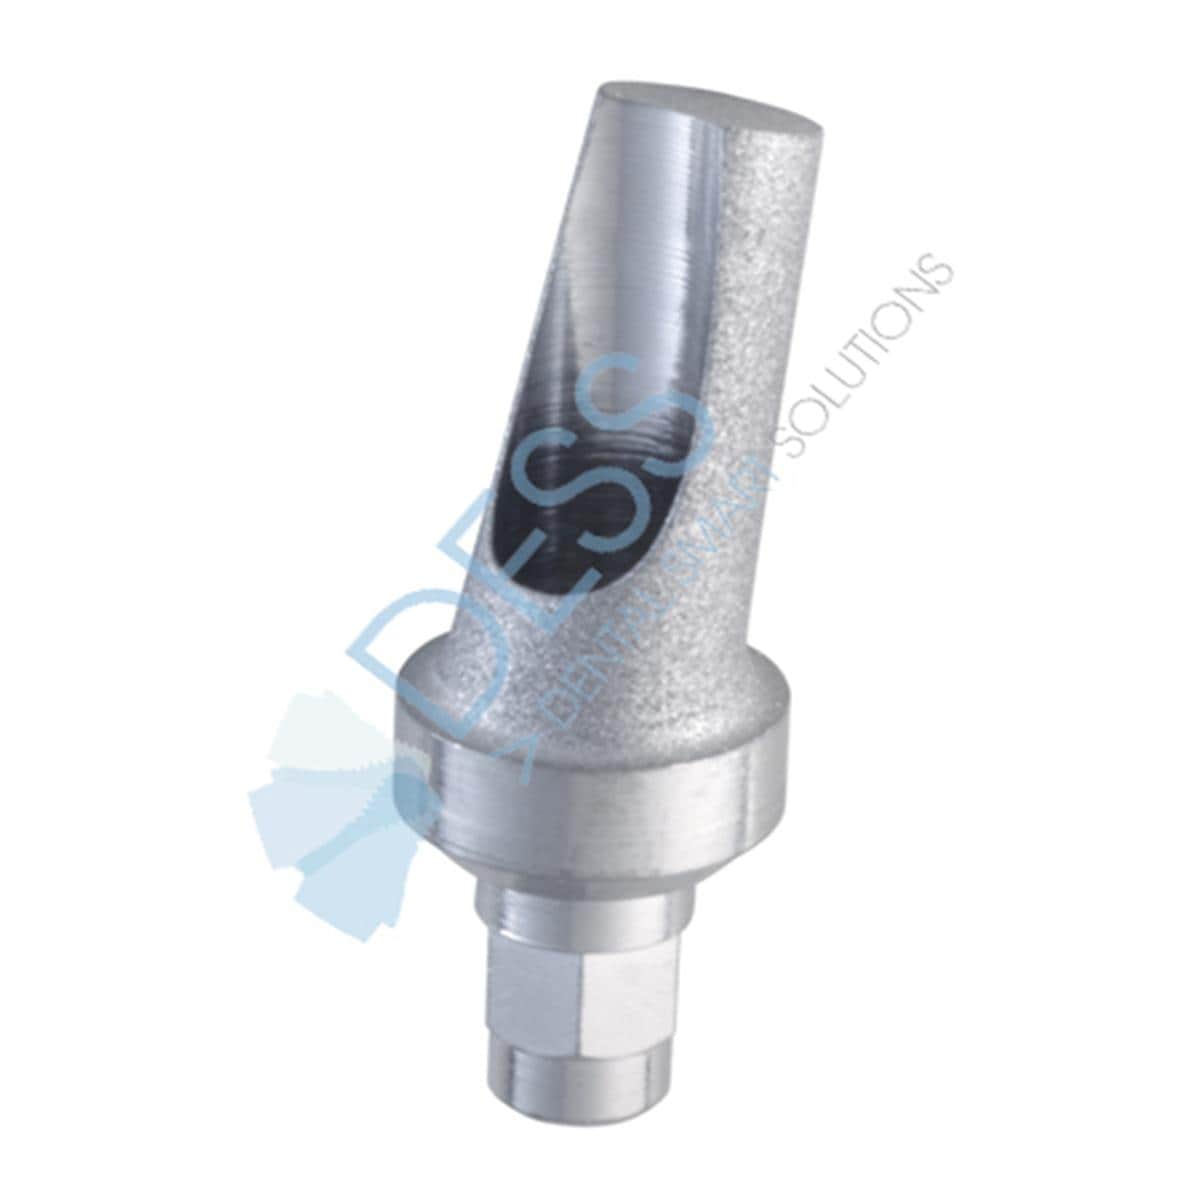 Titanabutment - kompatibel mit Dentsply Friadent® Xive® - NP Ø 3,4 mm, 15° gewinkelt